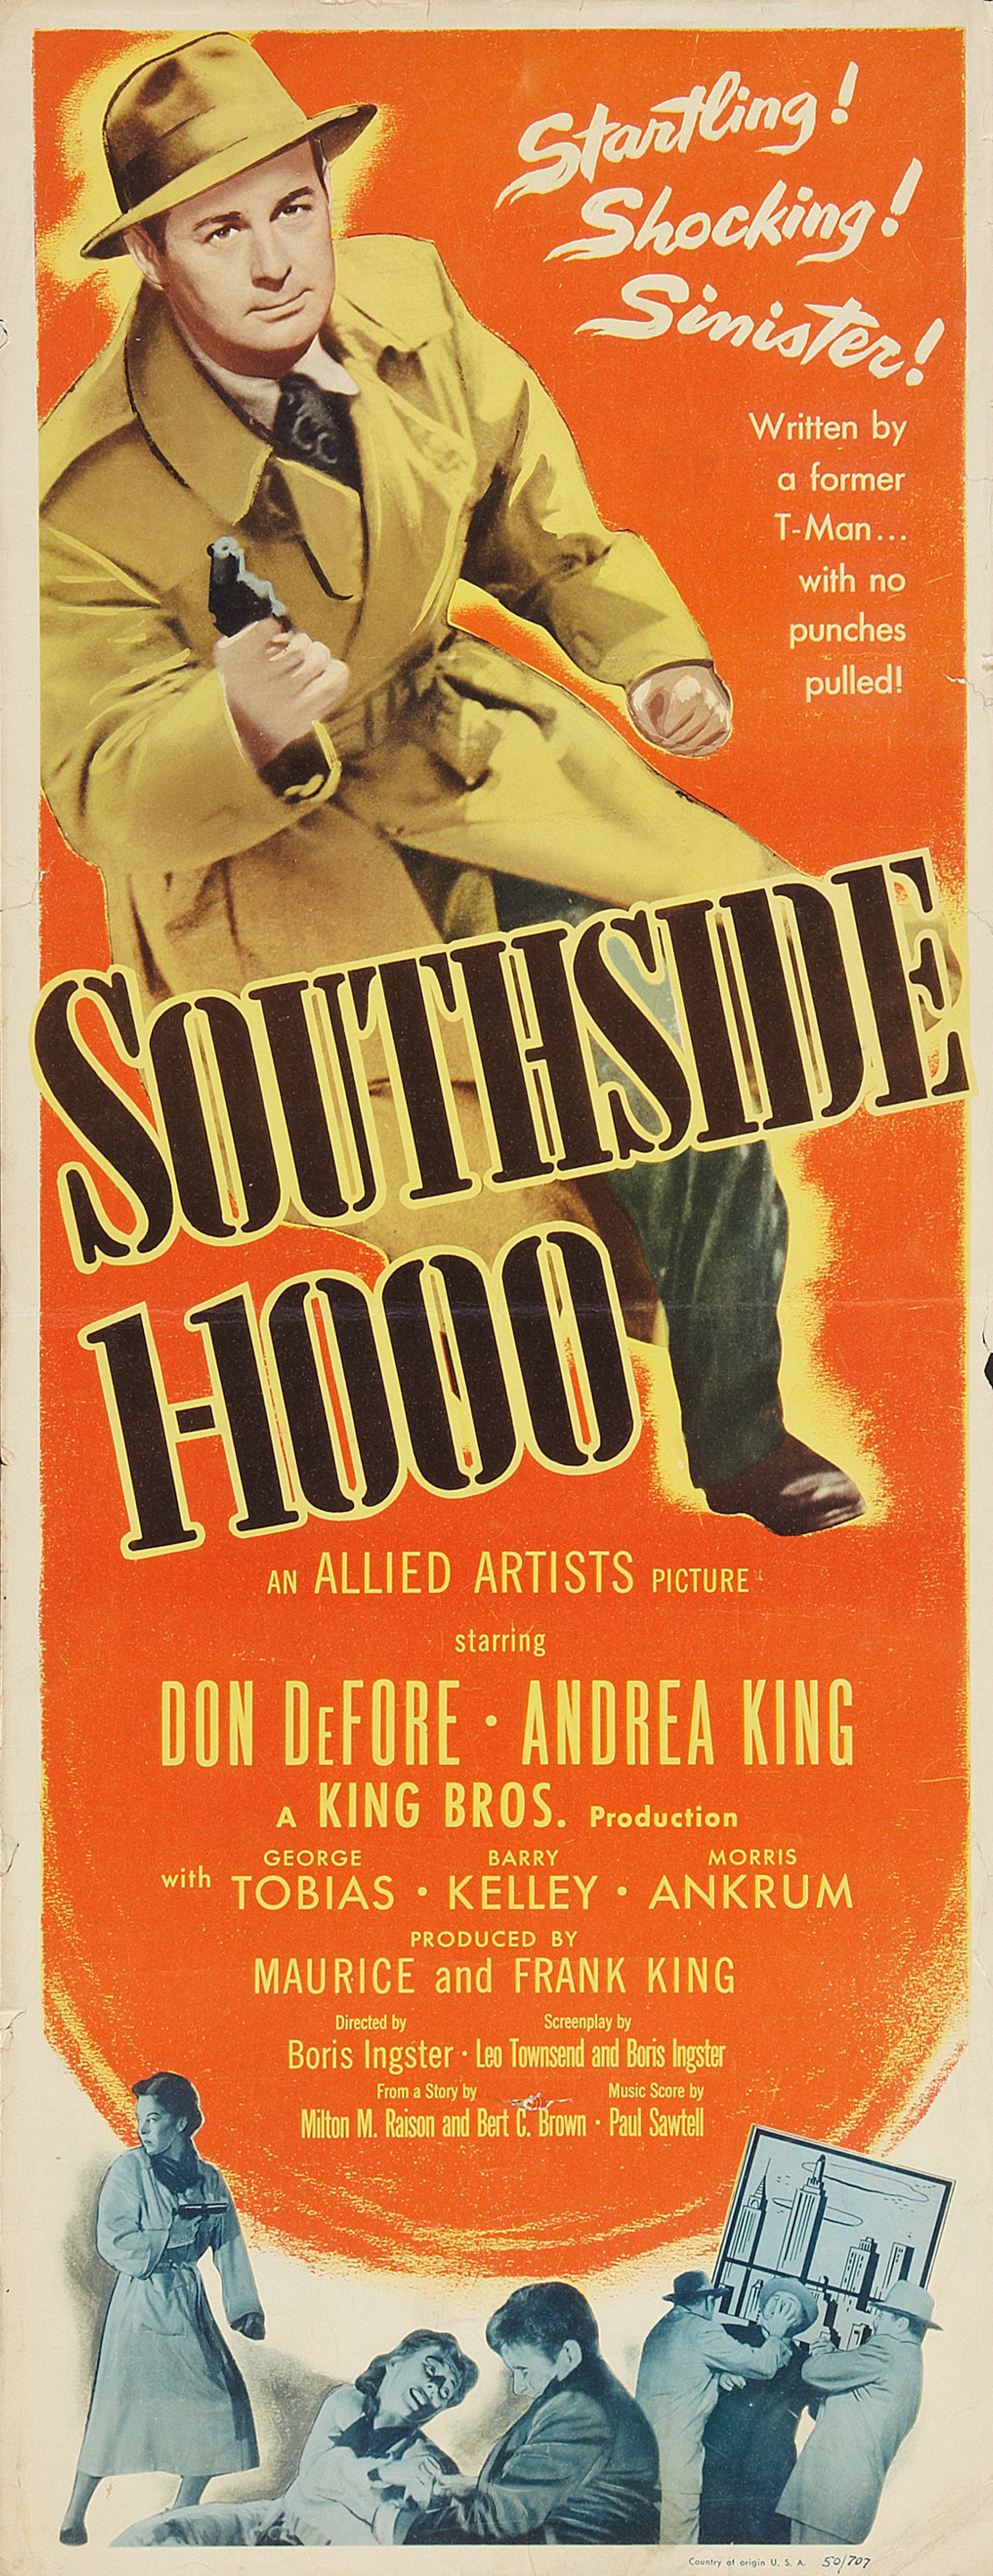 Mega Sized Movie Poster Image for Southside 1-1000 (#2 of 2)